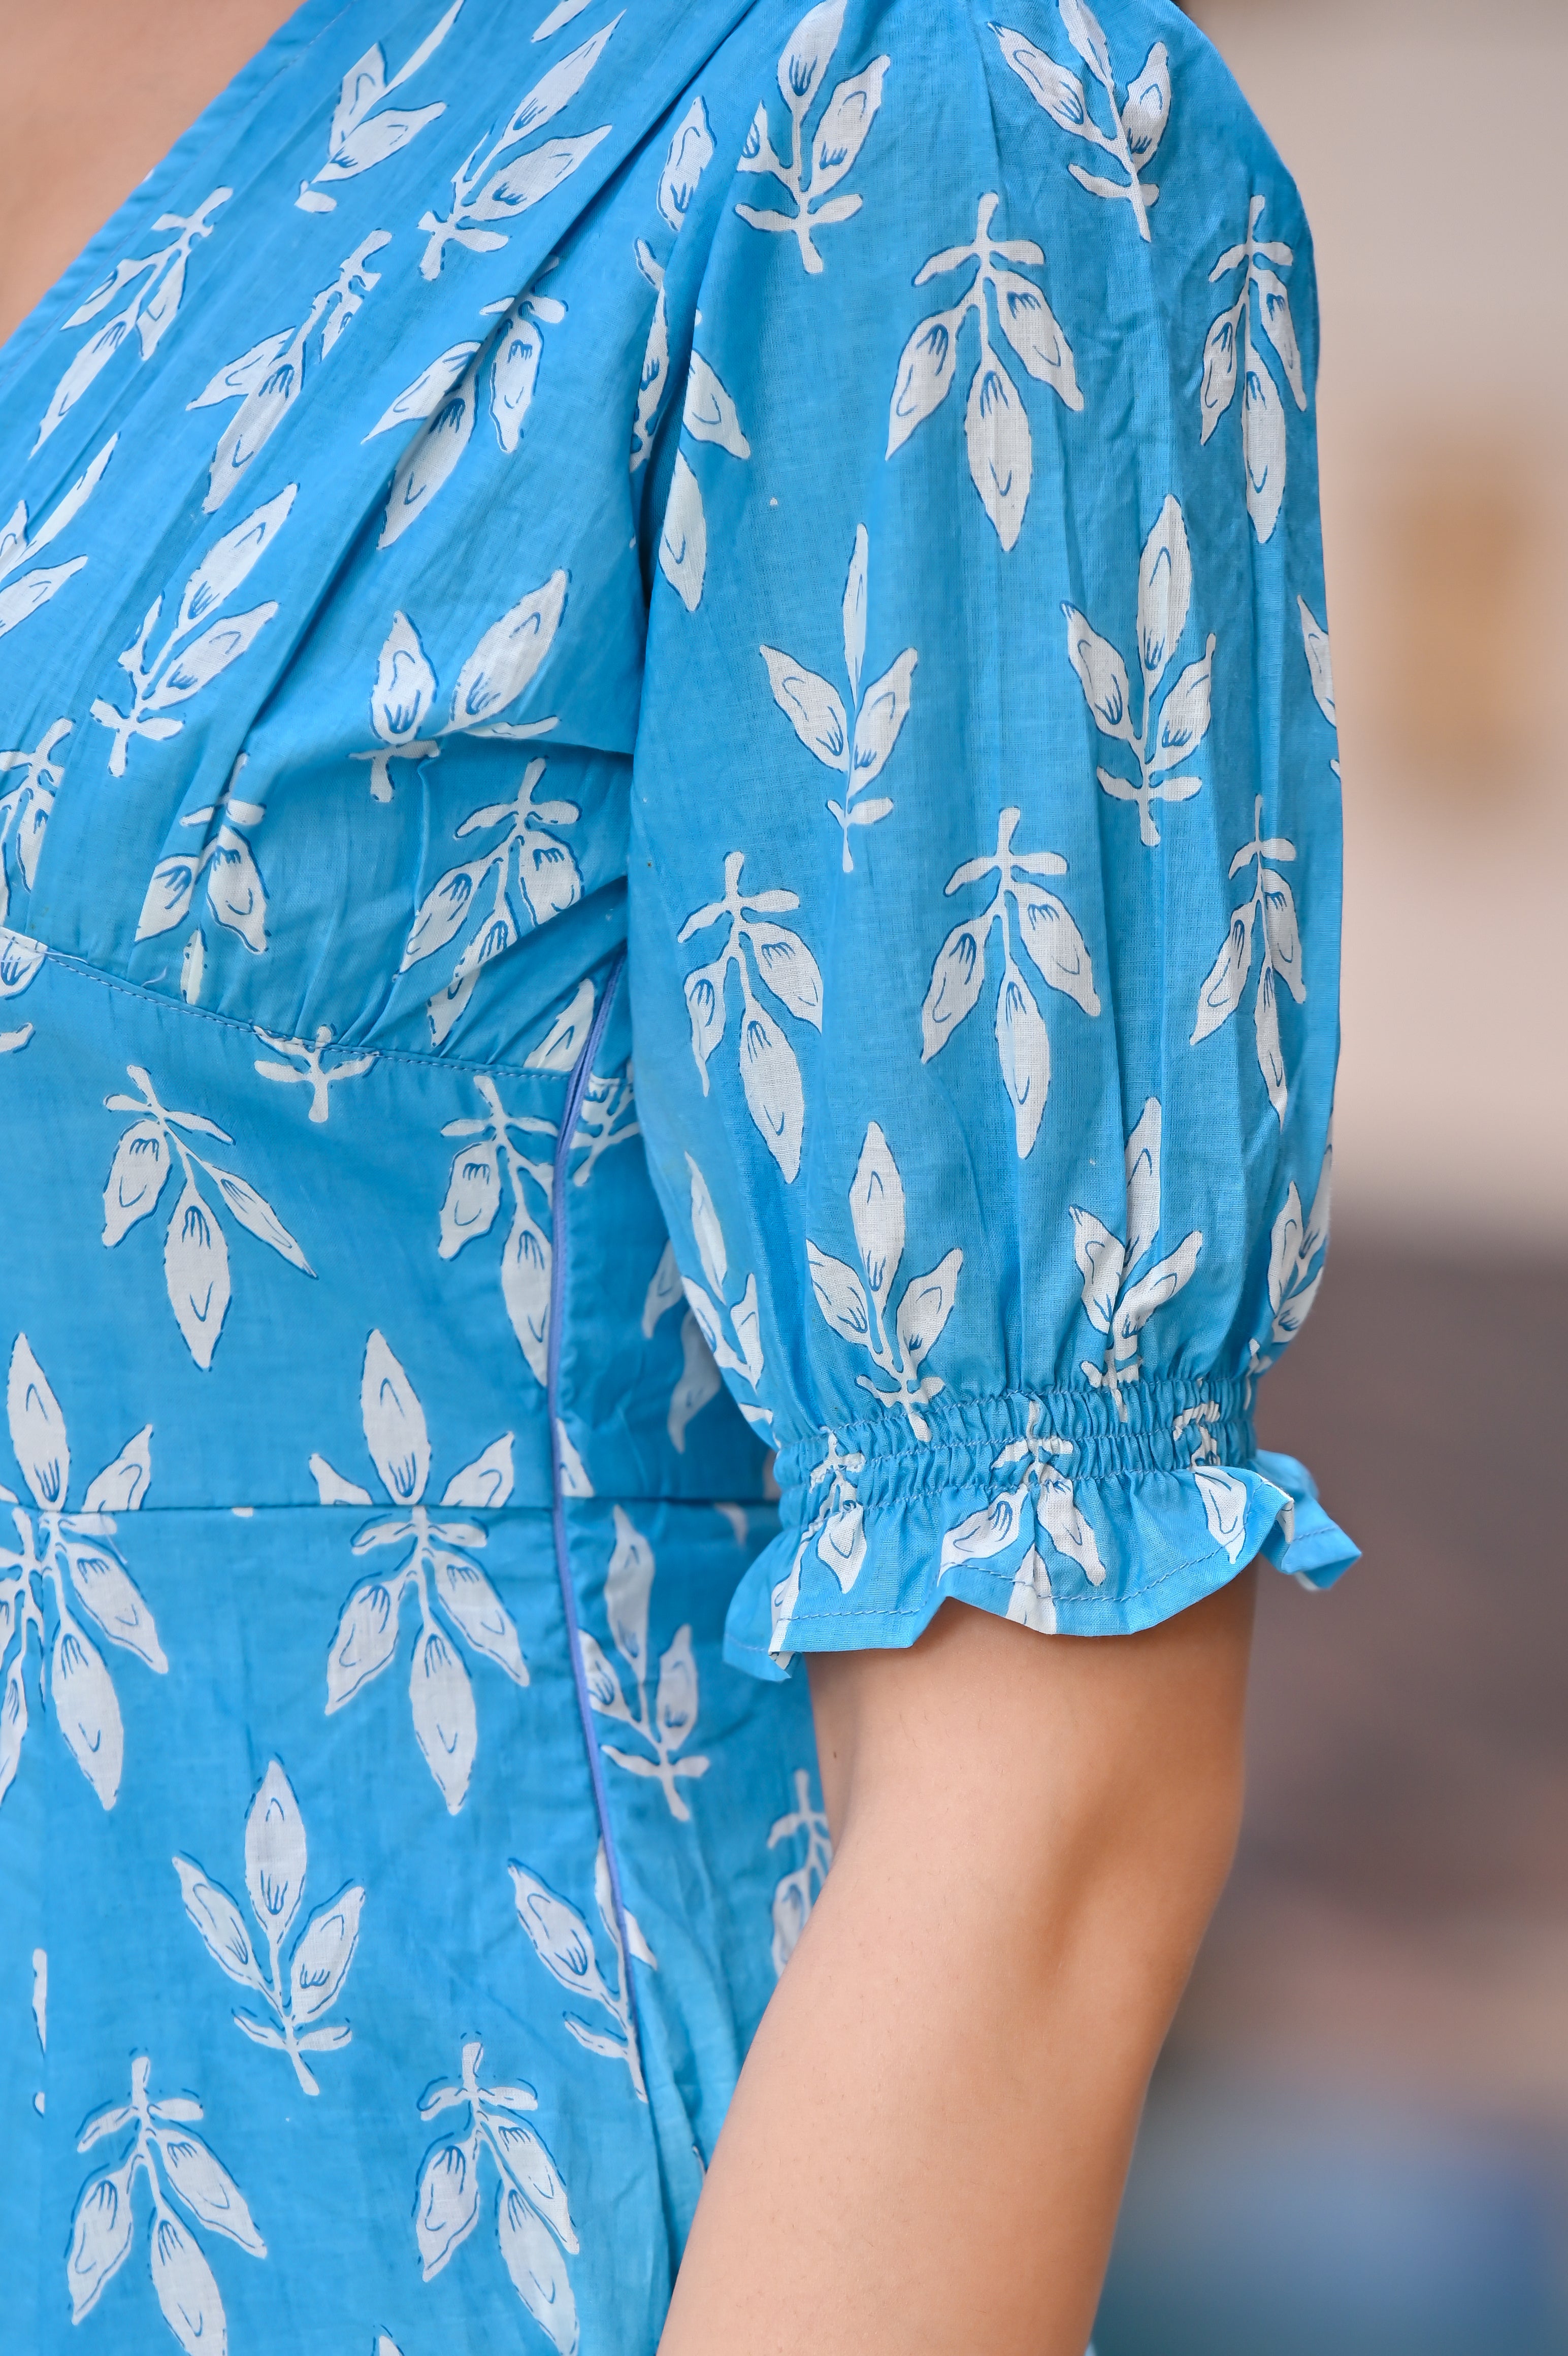 Azure Blue Classy Cotton Dress